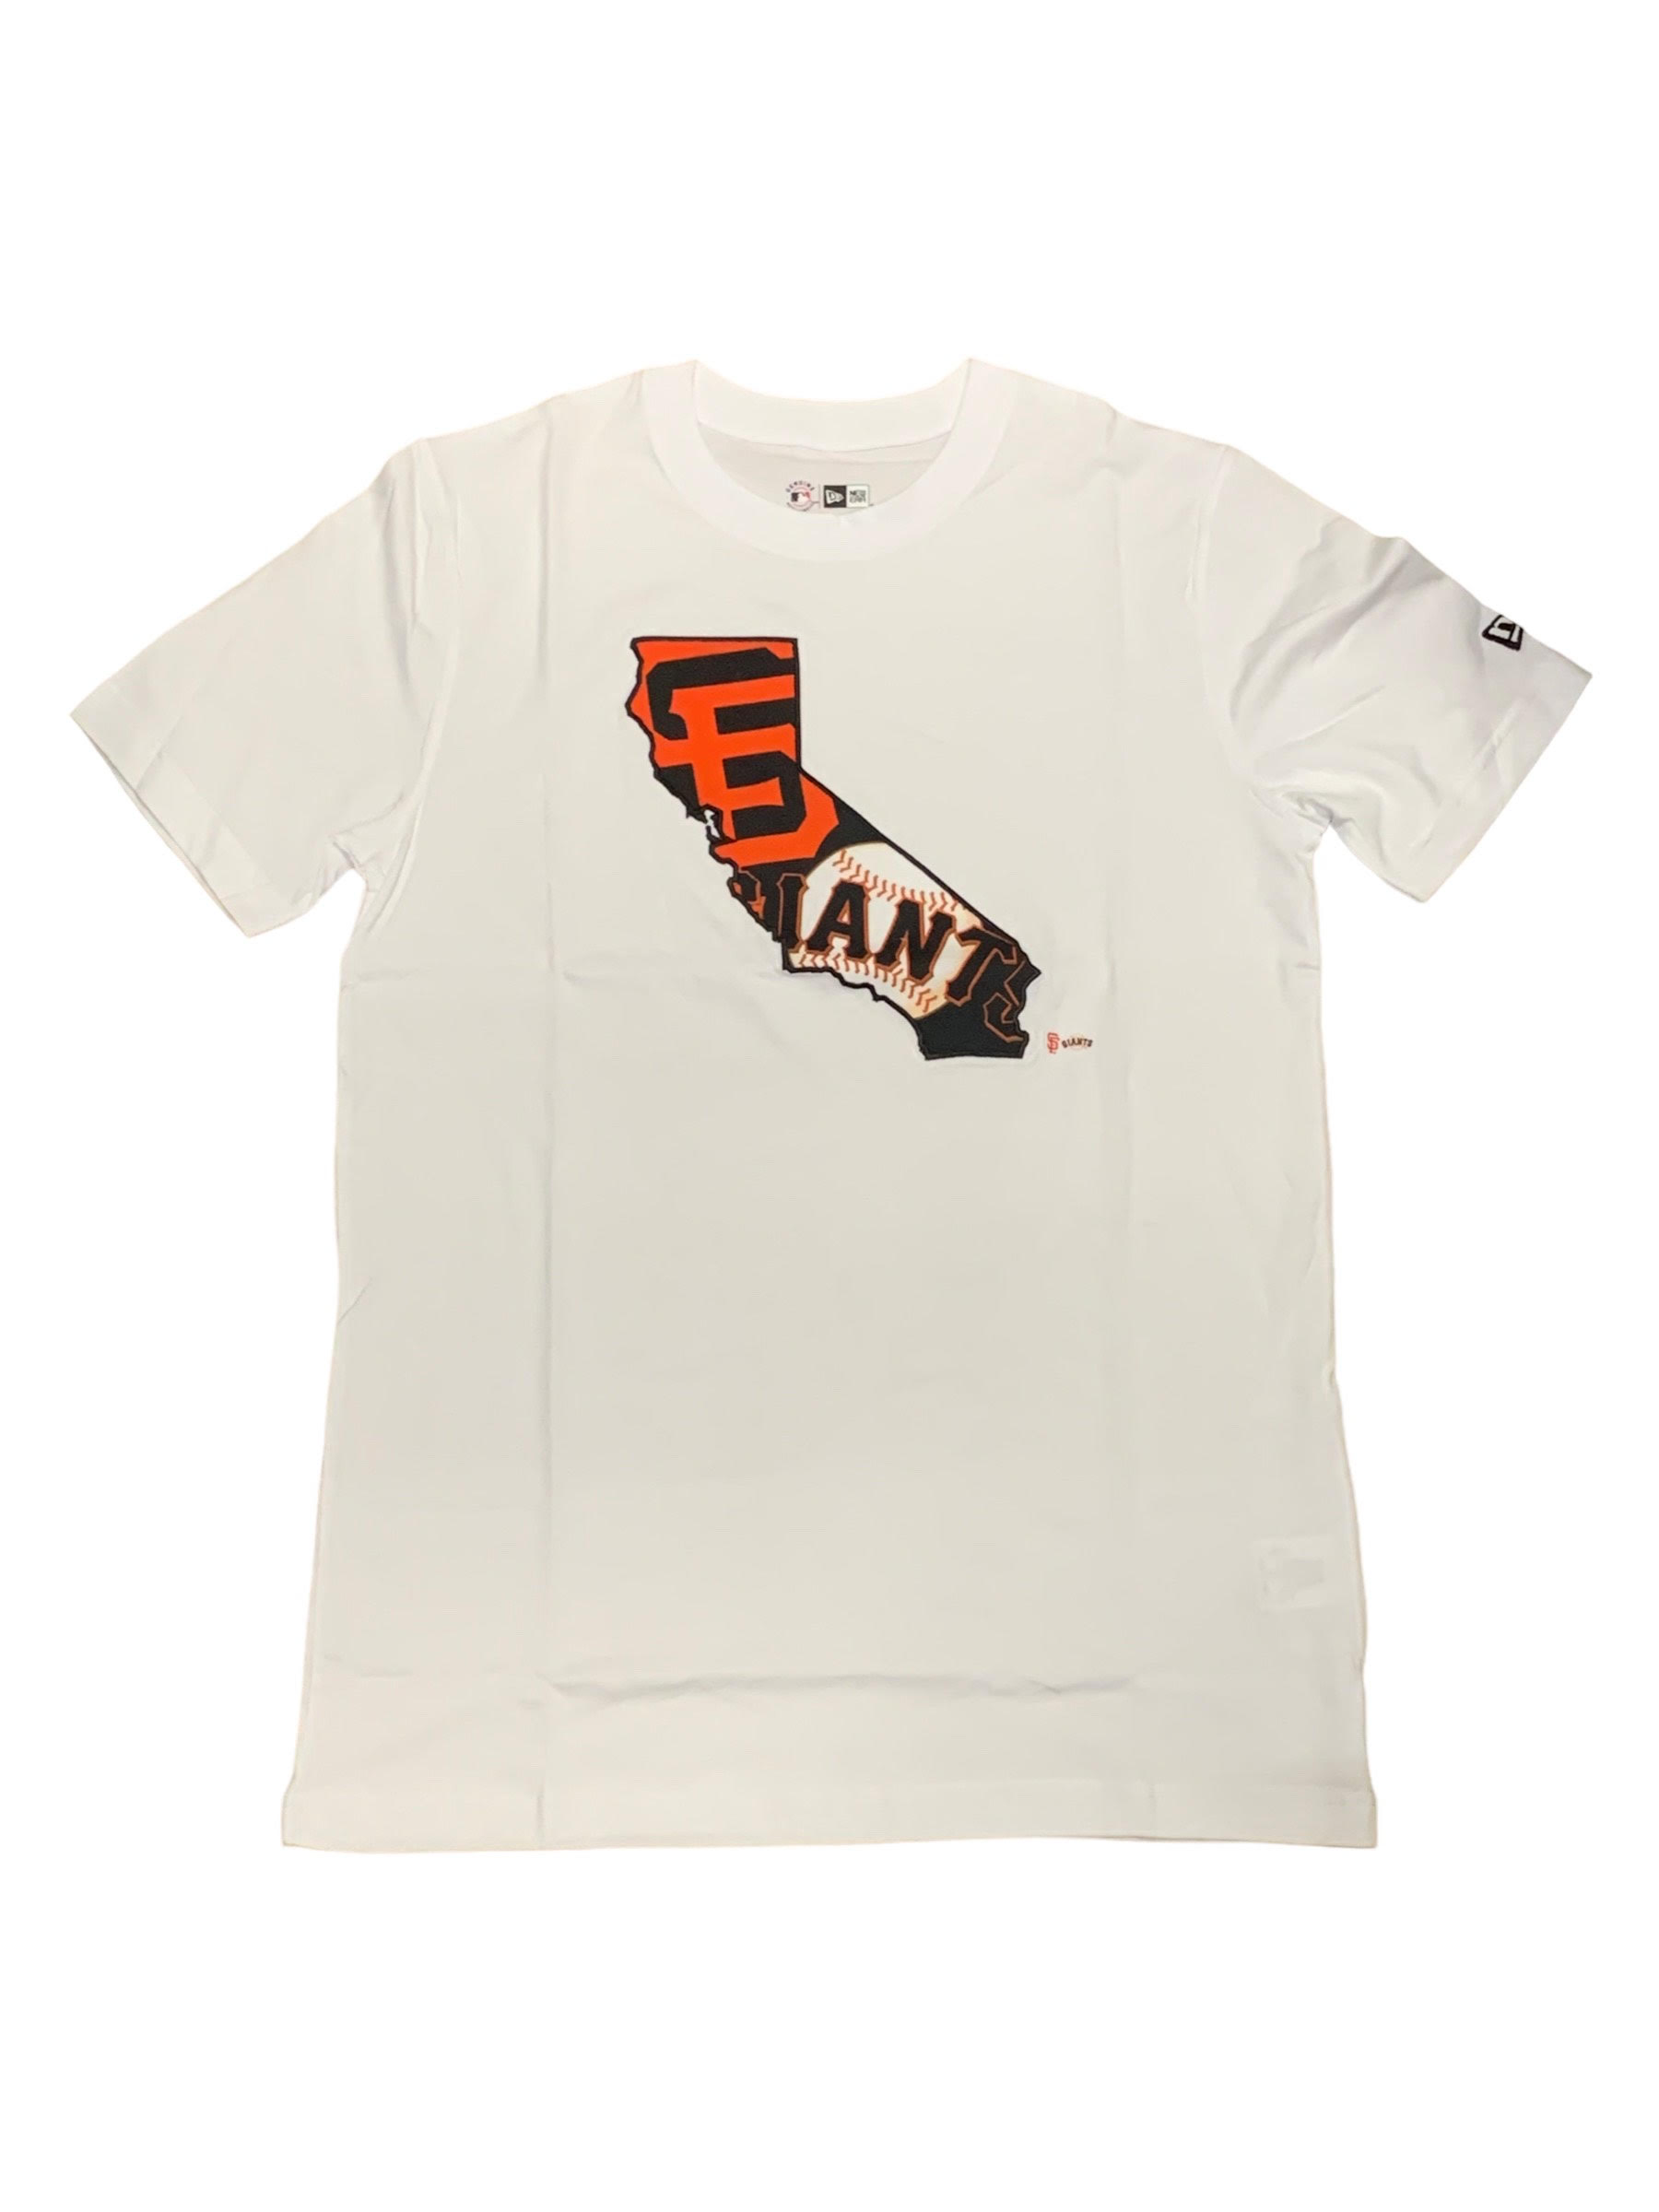 Equipo San Francisco Giants oficial, Giants camisetas, tienda, San